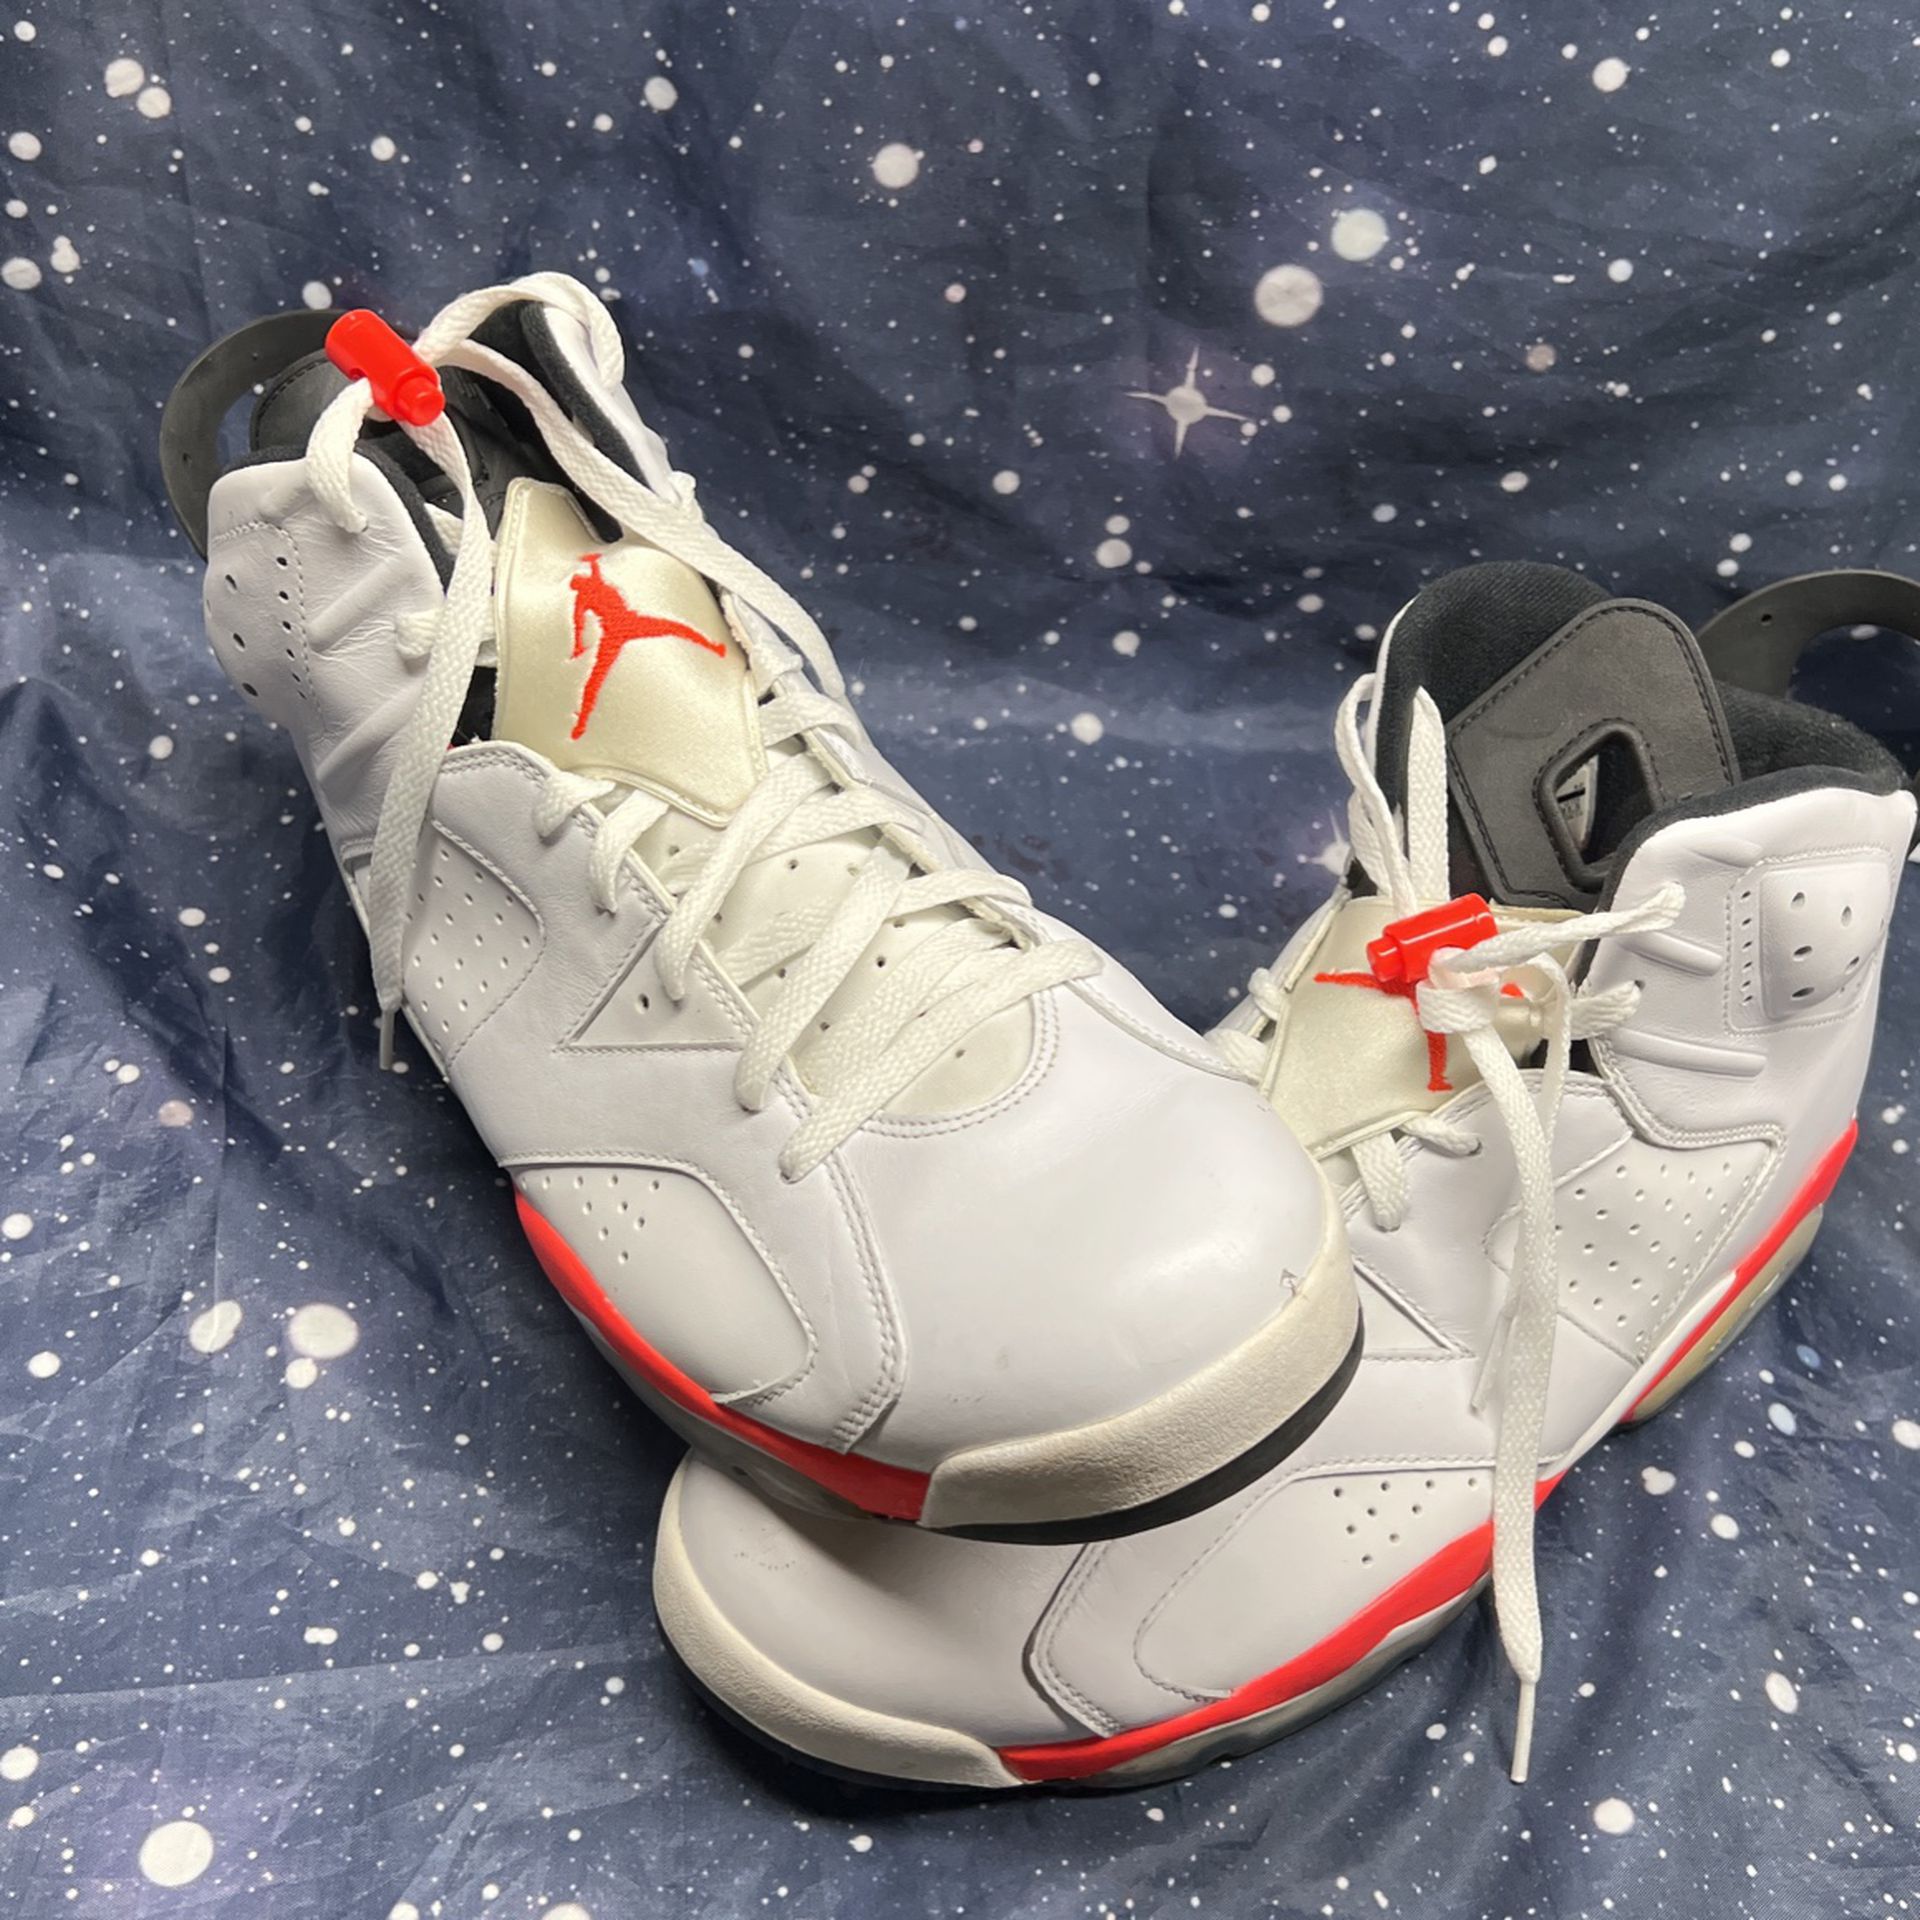 Size 13 1/2 Jordan 6 Retro Infrared White 2014